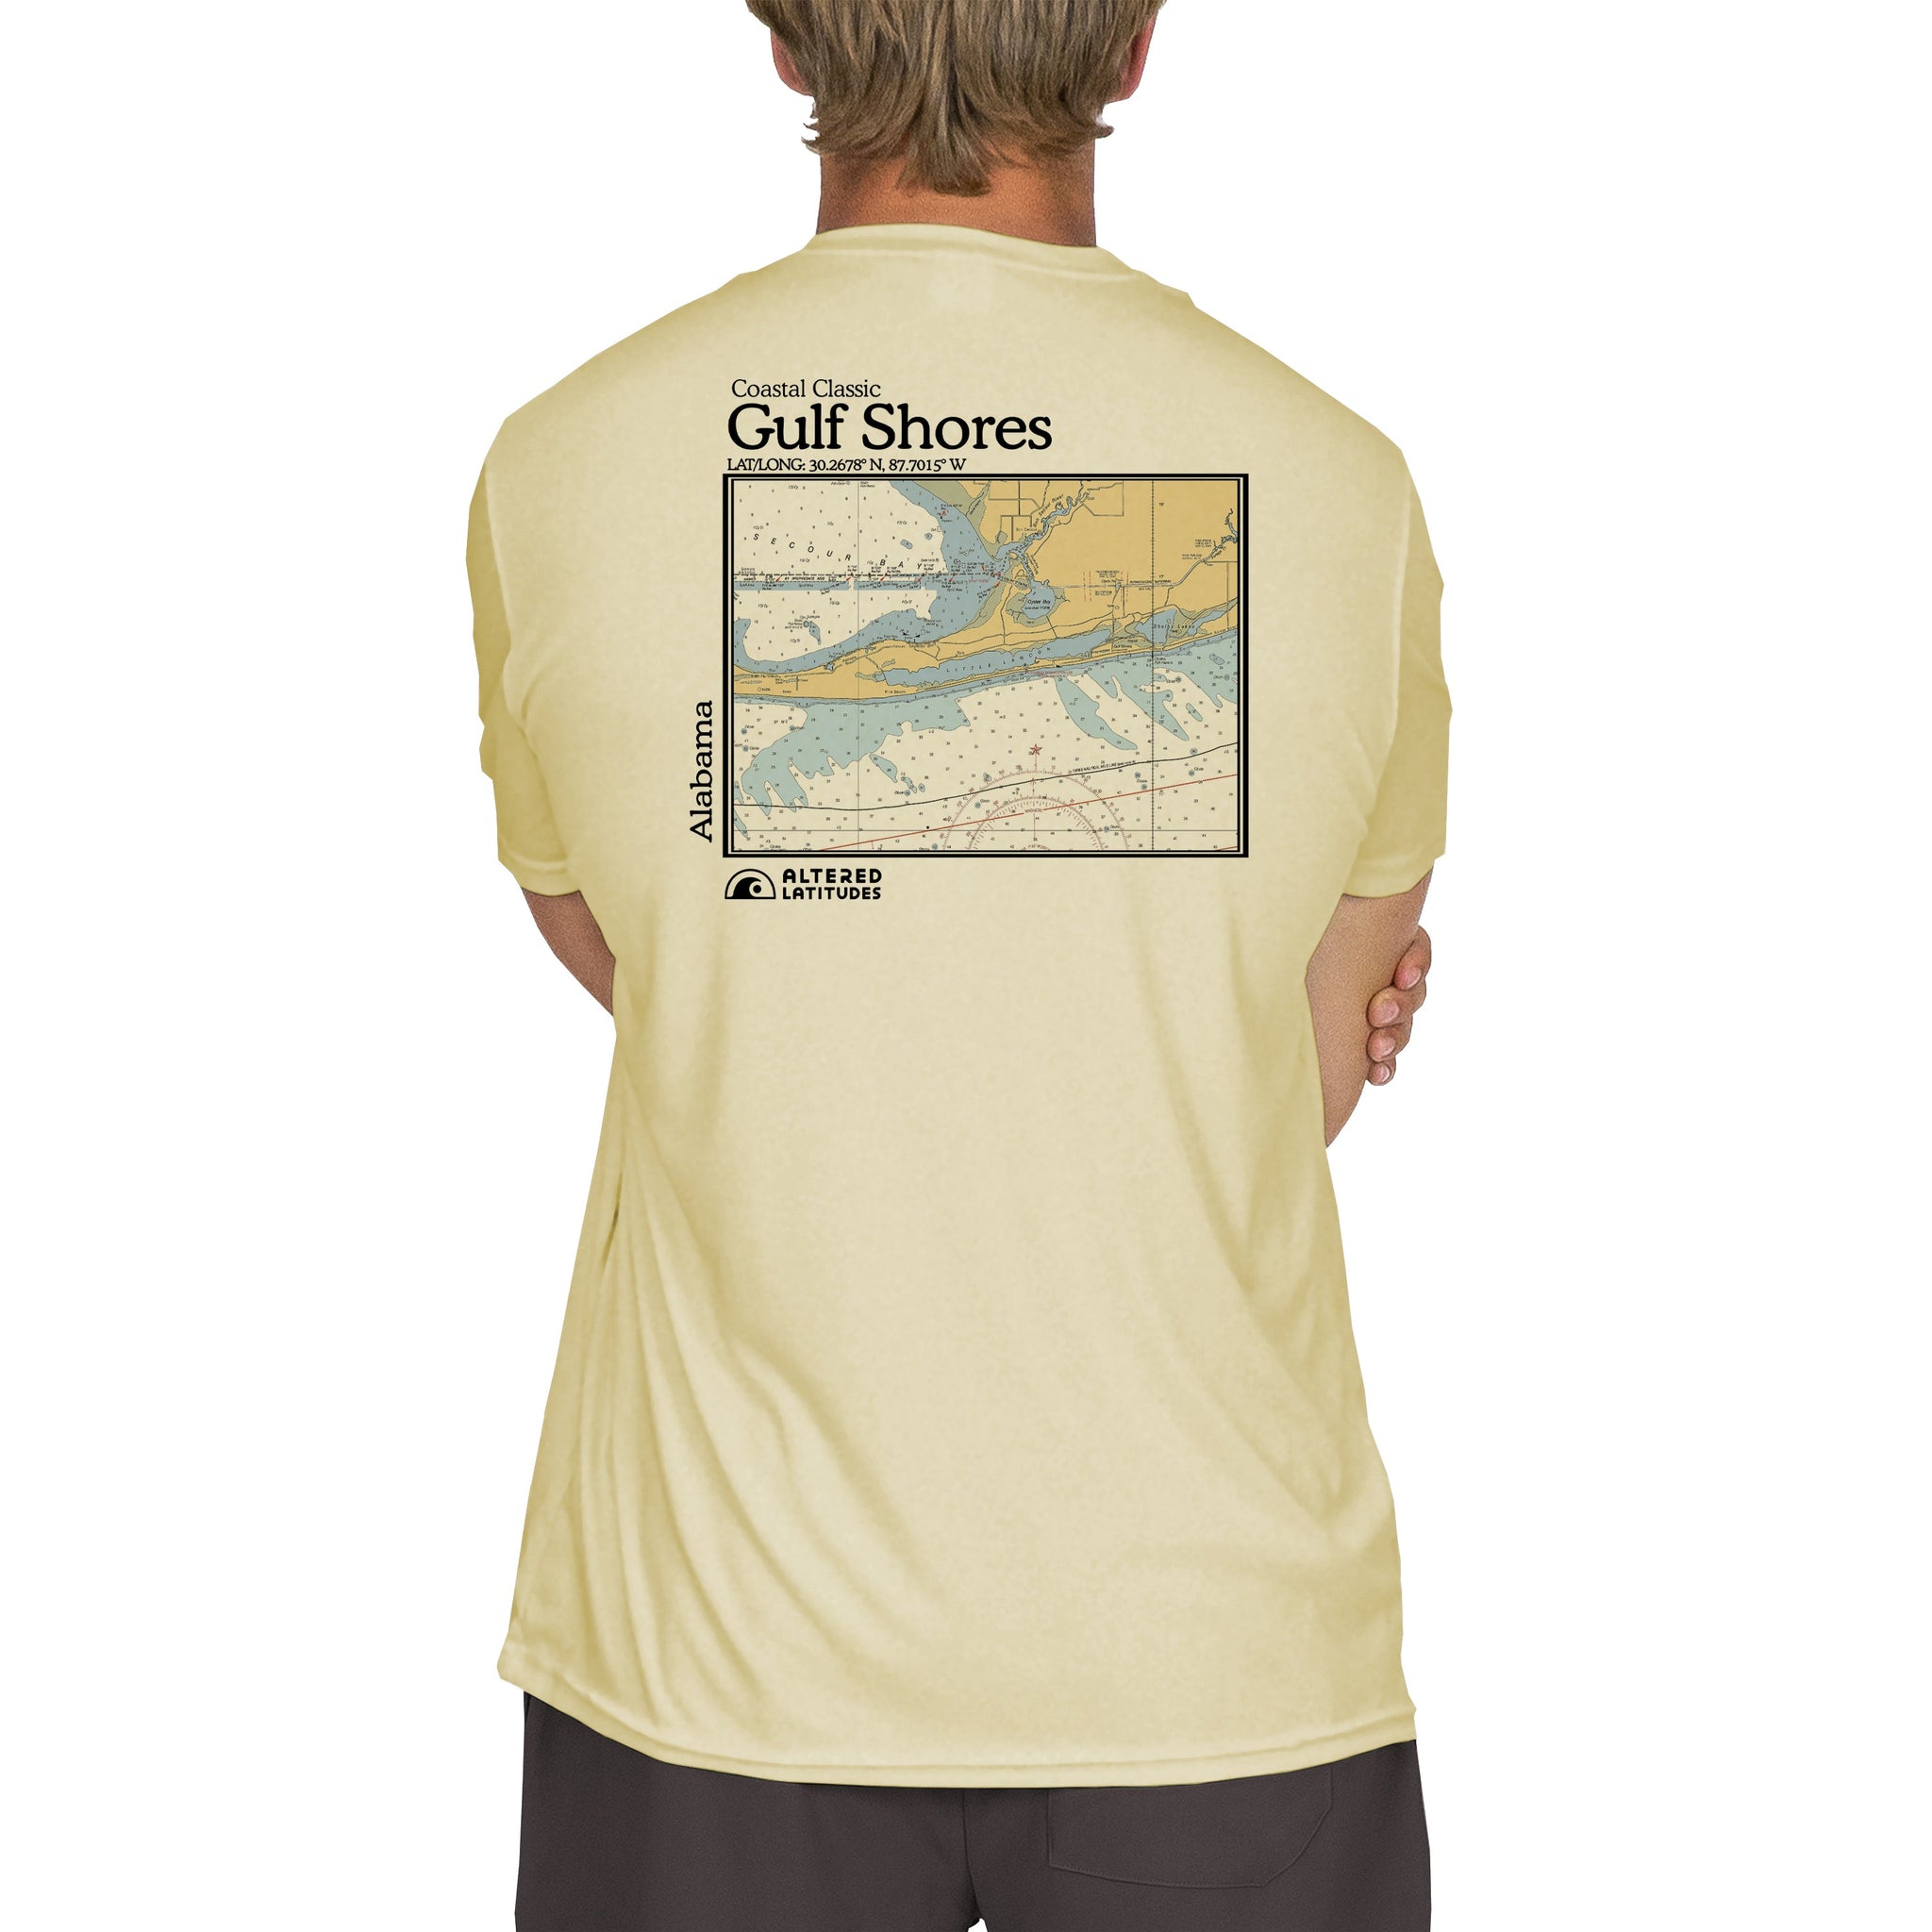 Coastal Classics Gulf Shores Men's UPF 50 Short Sleeve